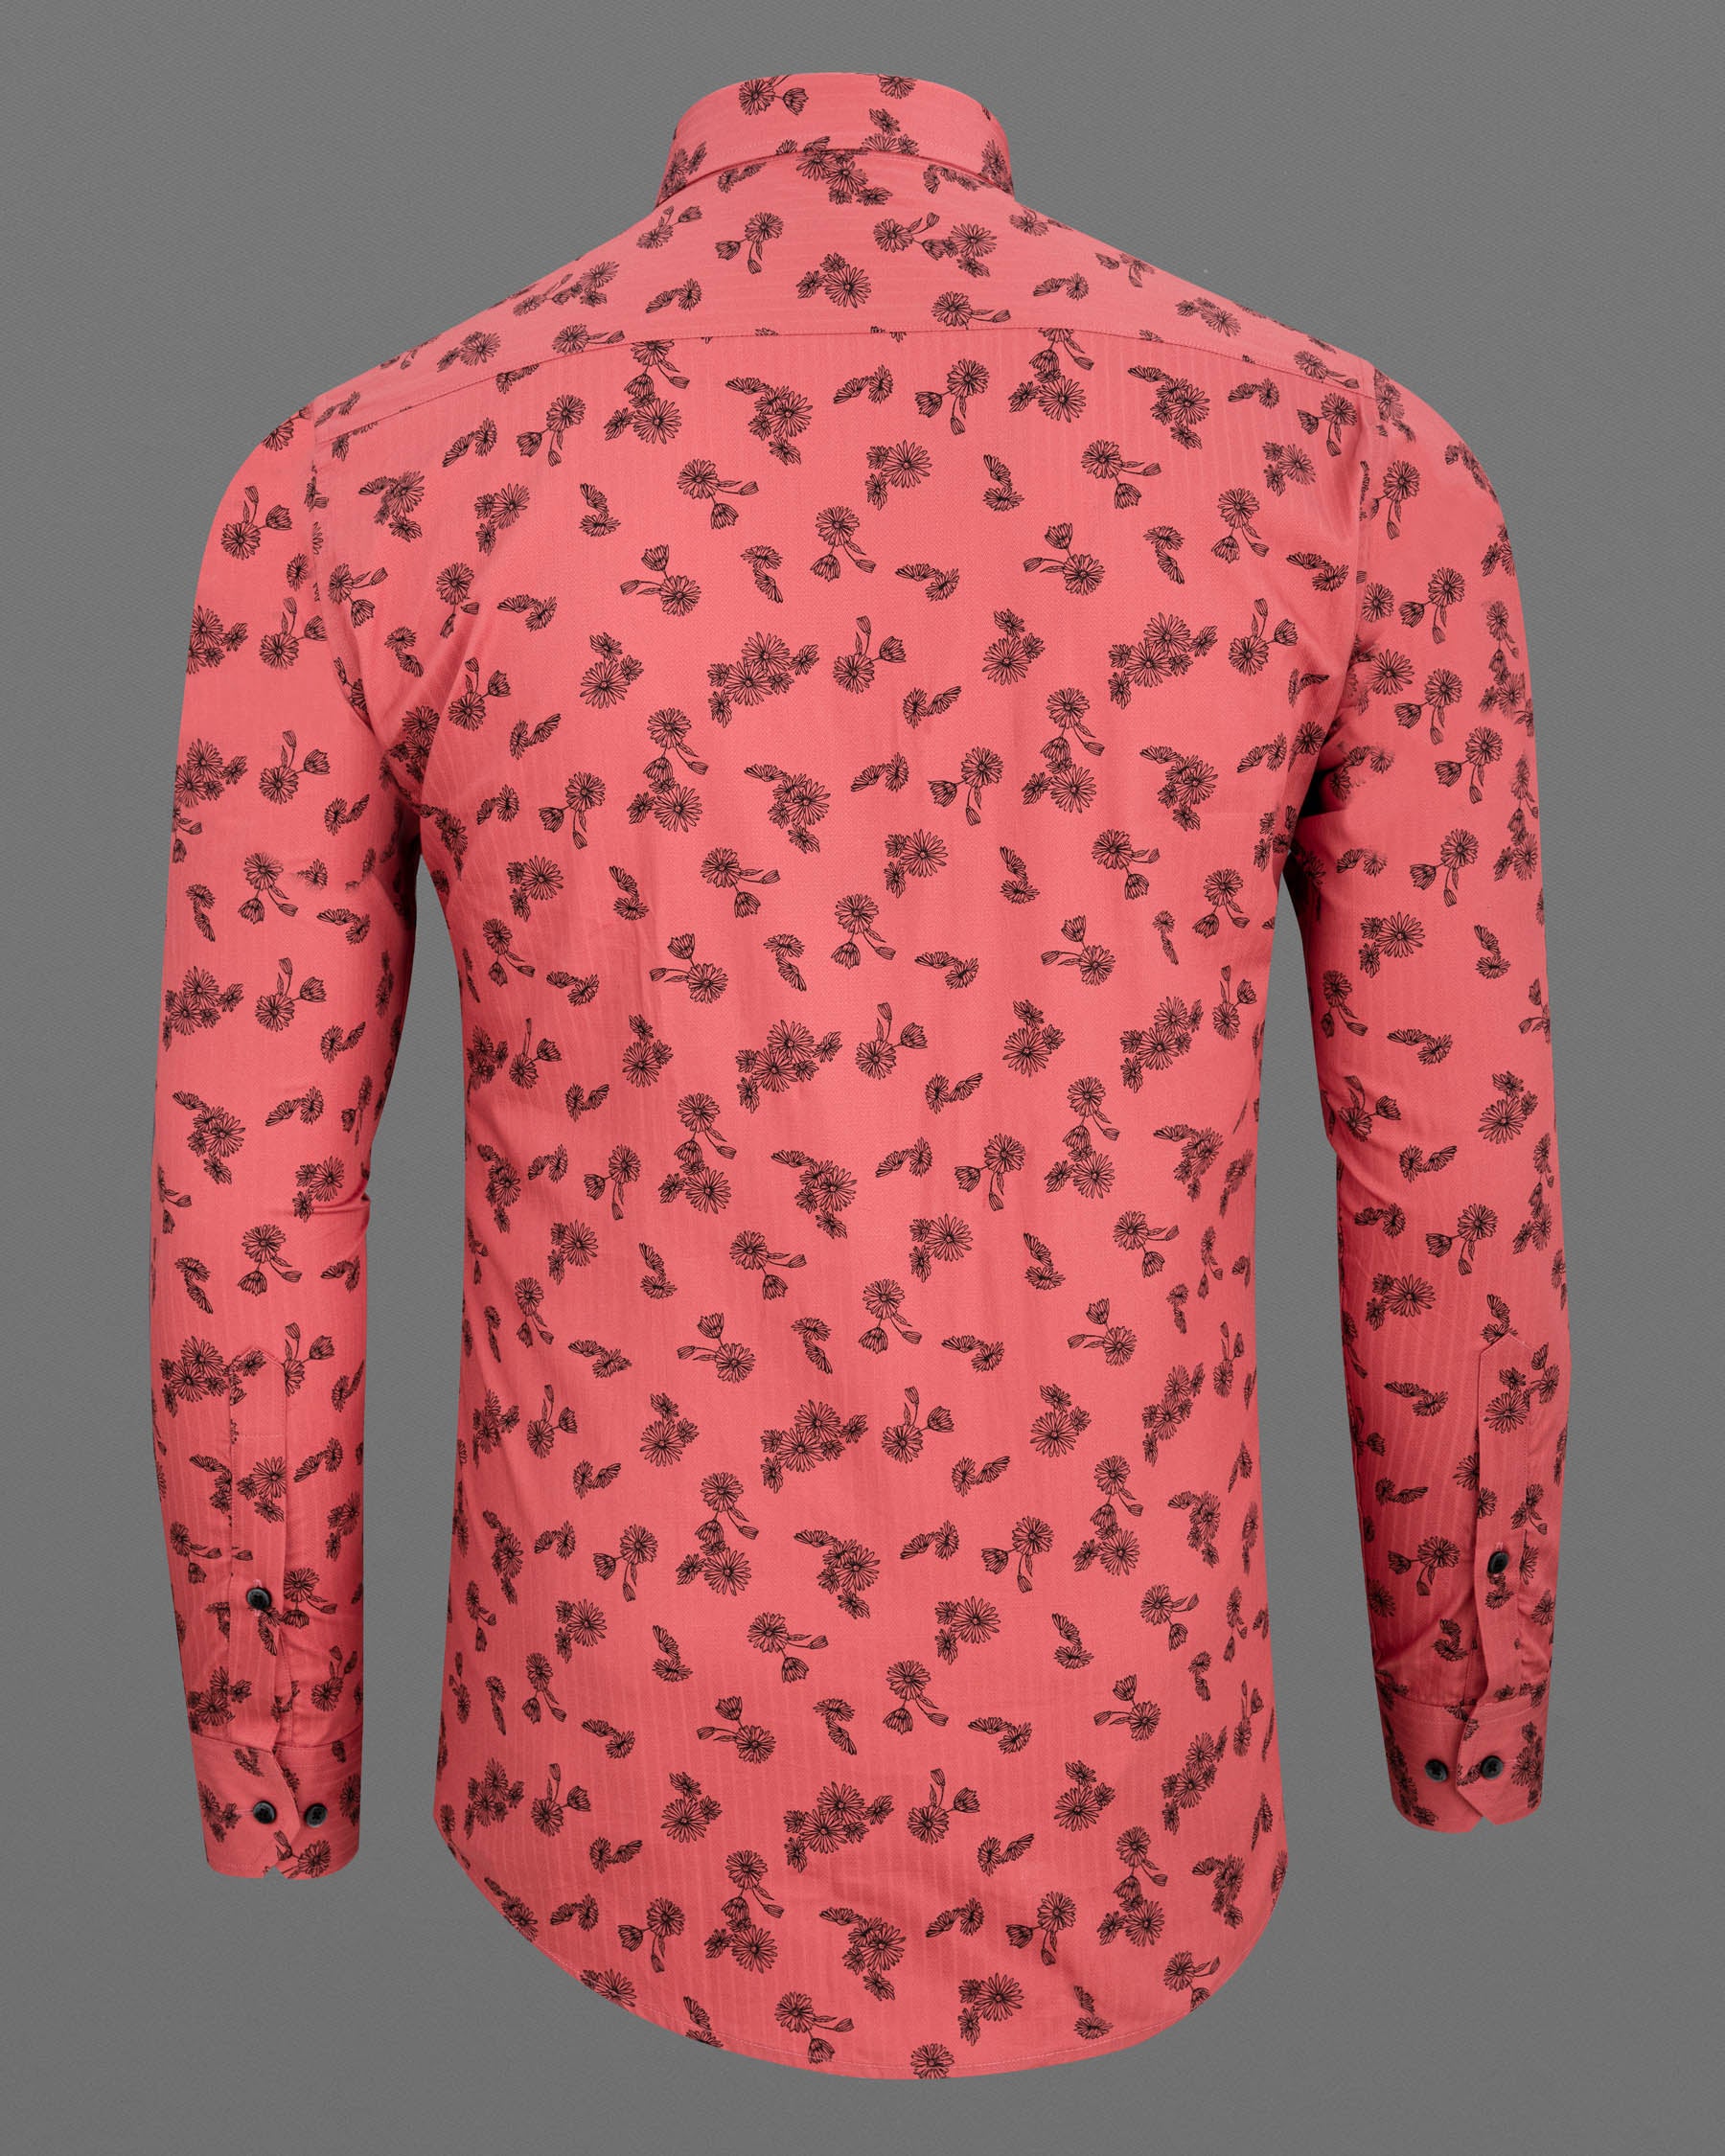 Dark Terra Cotta Floral Printed Dobby Textured Premium Giza Cotton Shirt